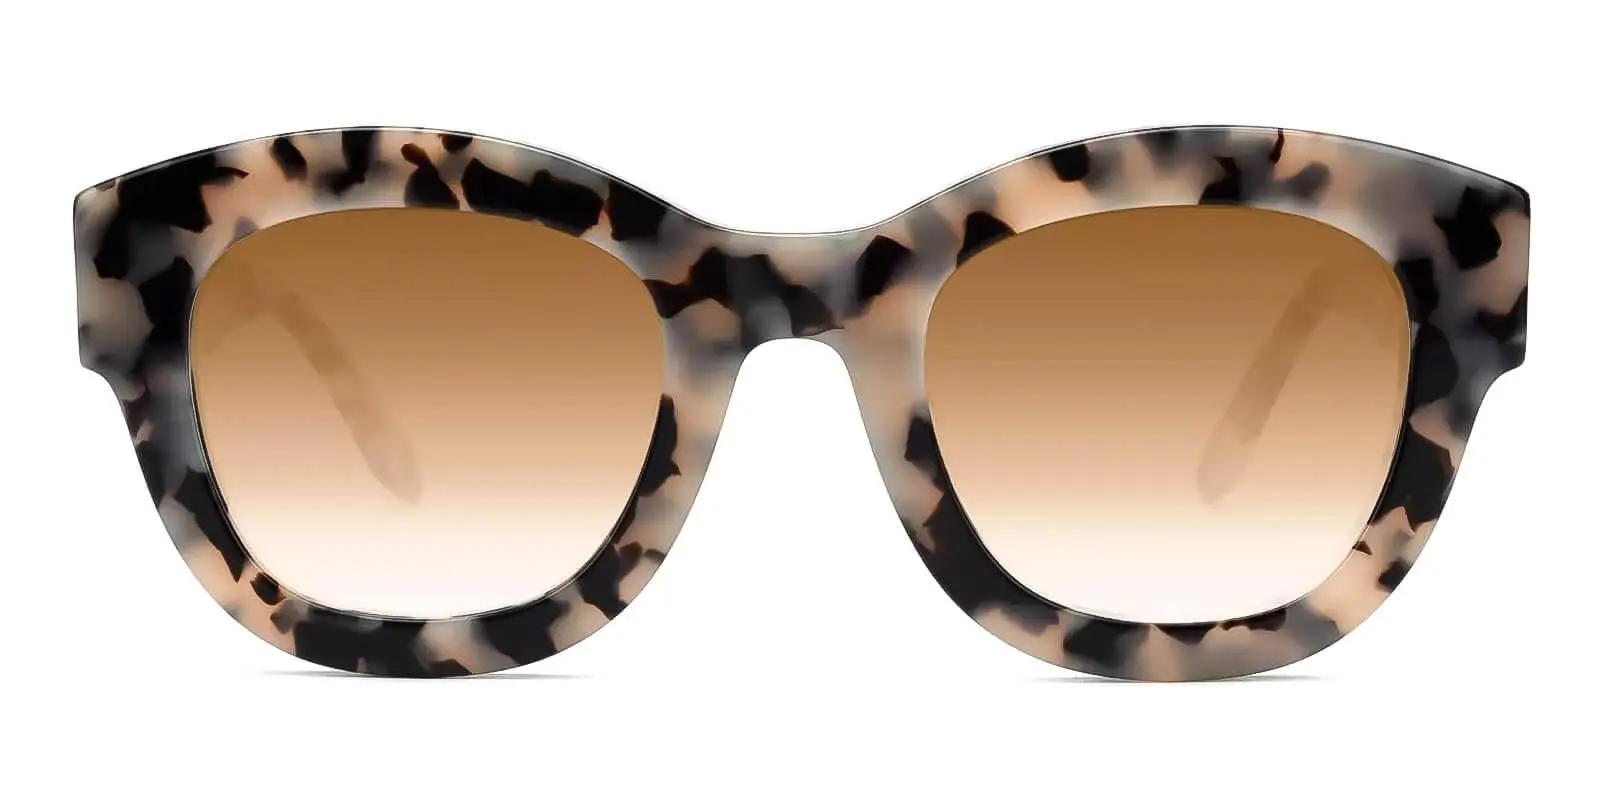 Meridian Ivory-tortoise Acetate Fashion , Sunglasses , UniversalBridgeFit Frames from ABBE Glasses